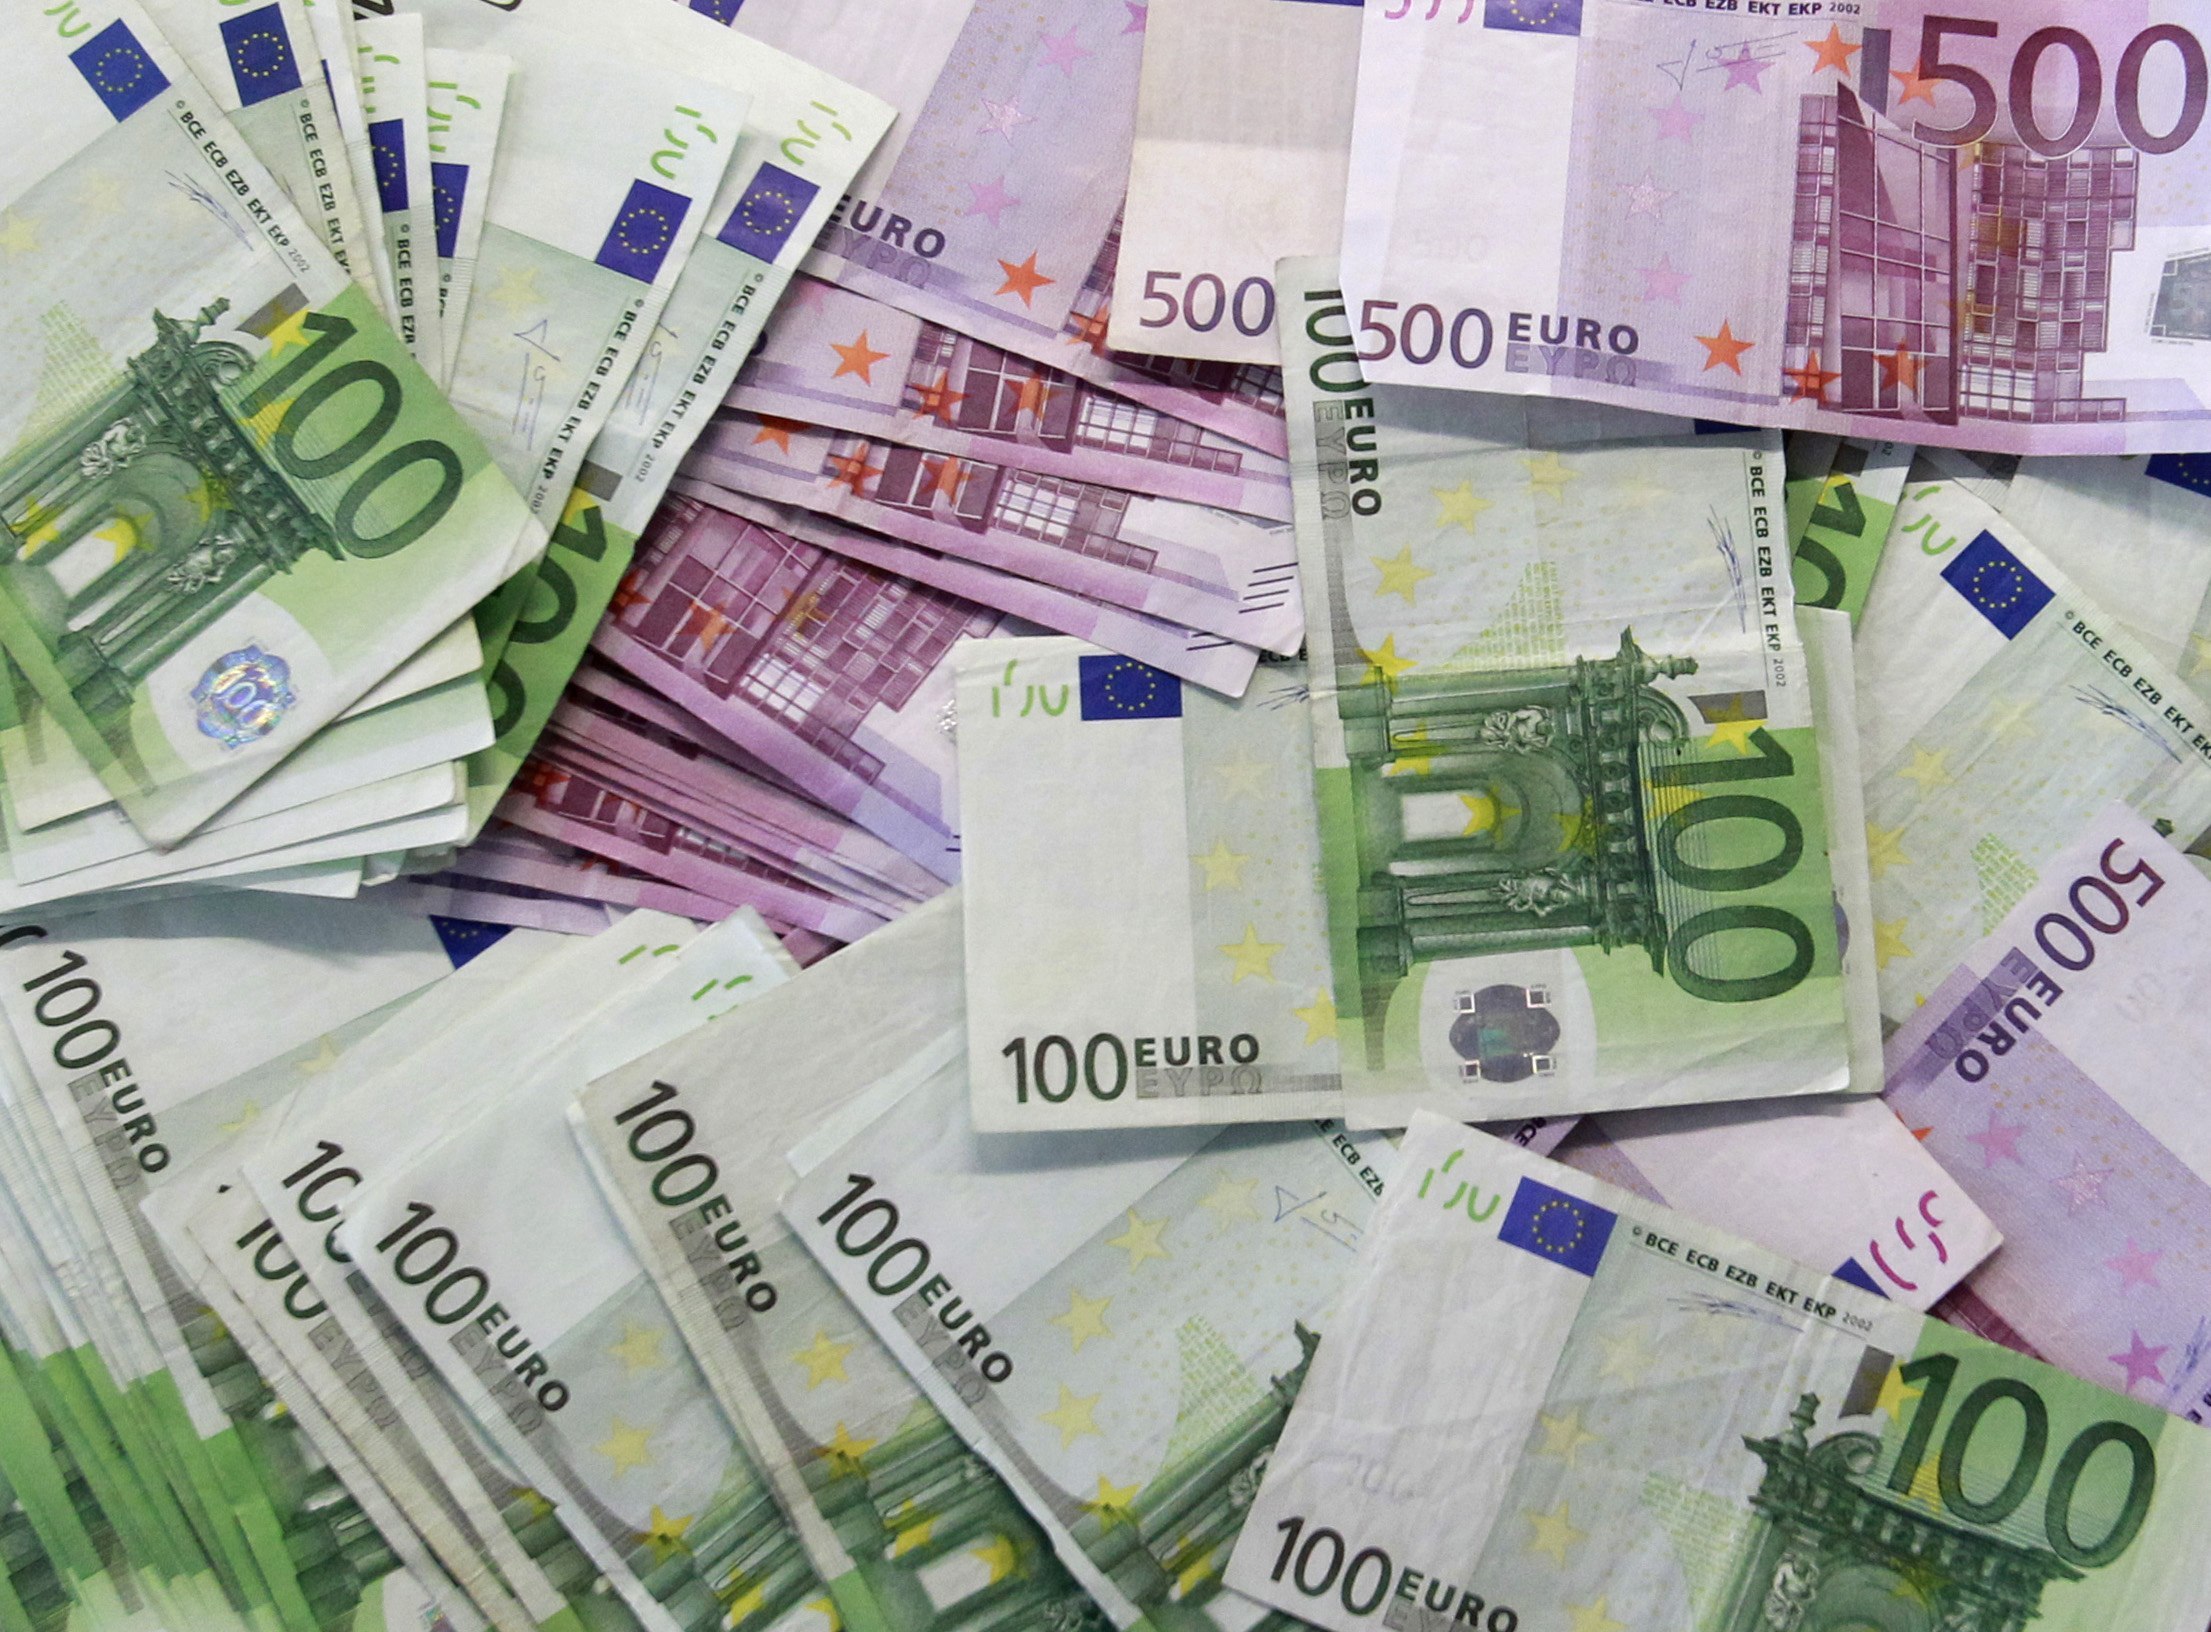 Daily Mail: Αεροπλάνα γεμάτα λεφτά έσωσαν την Ελλάδα – Η Ε.Ε. απειλούσε τους Έλληνες, αλλά μυστικά τους έδωσε 10 δισ. ευρώ